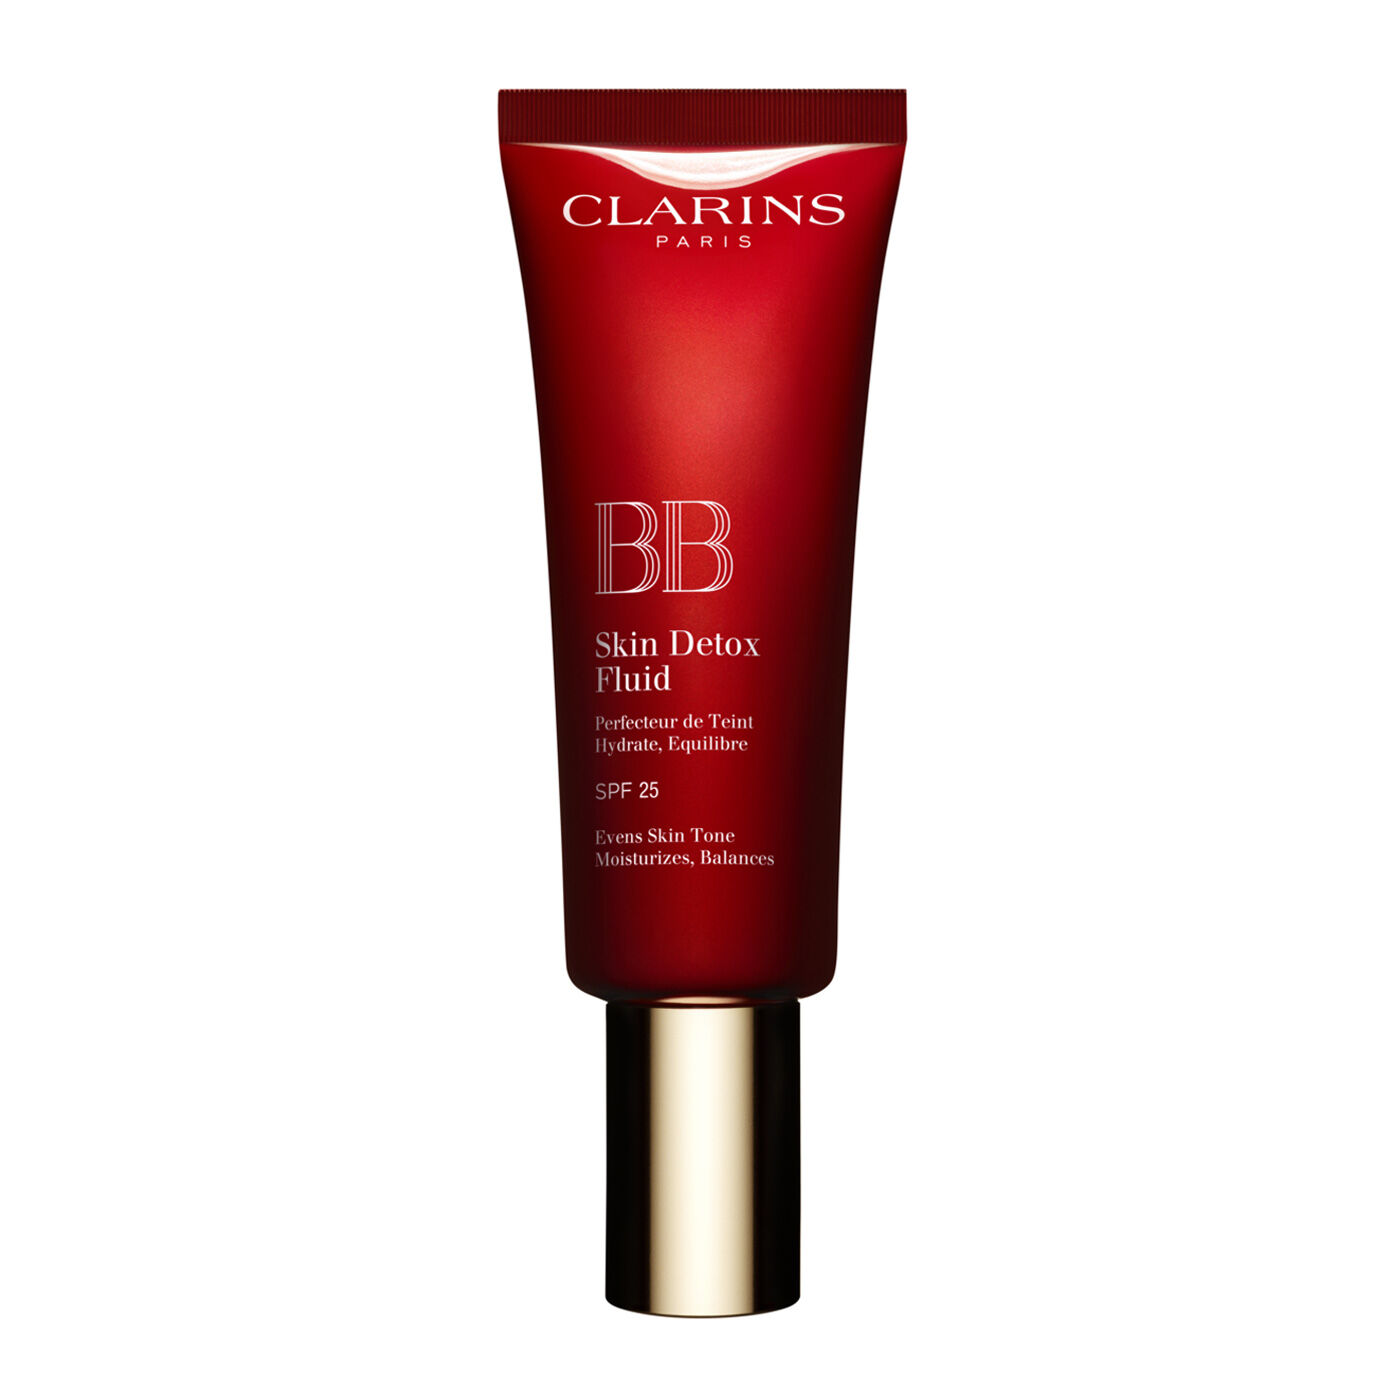 BB Skin Detox Fluid SPF 25 - Feuchtigkeit spendenes Makeup-Fluid